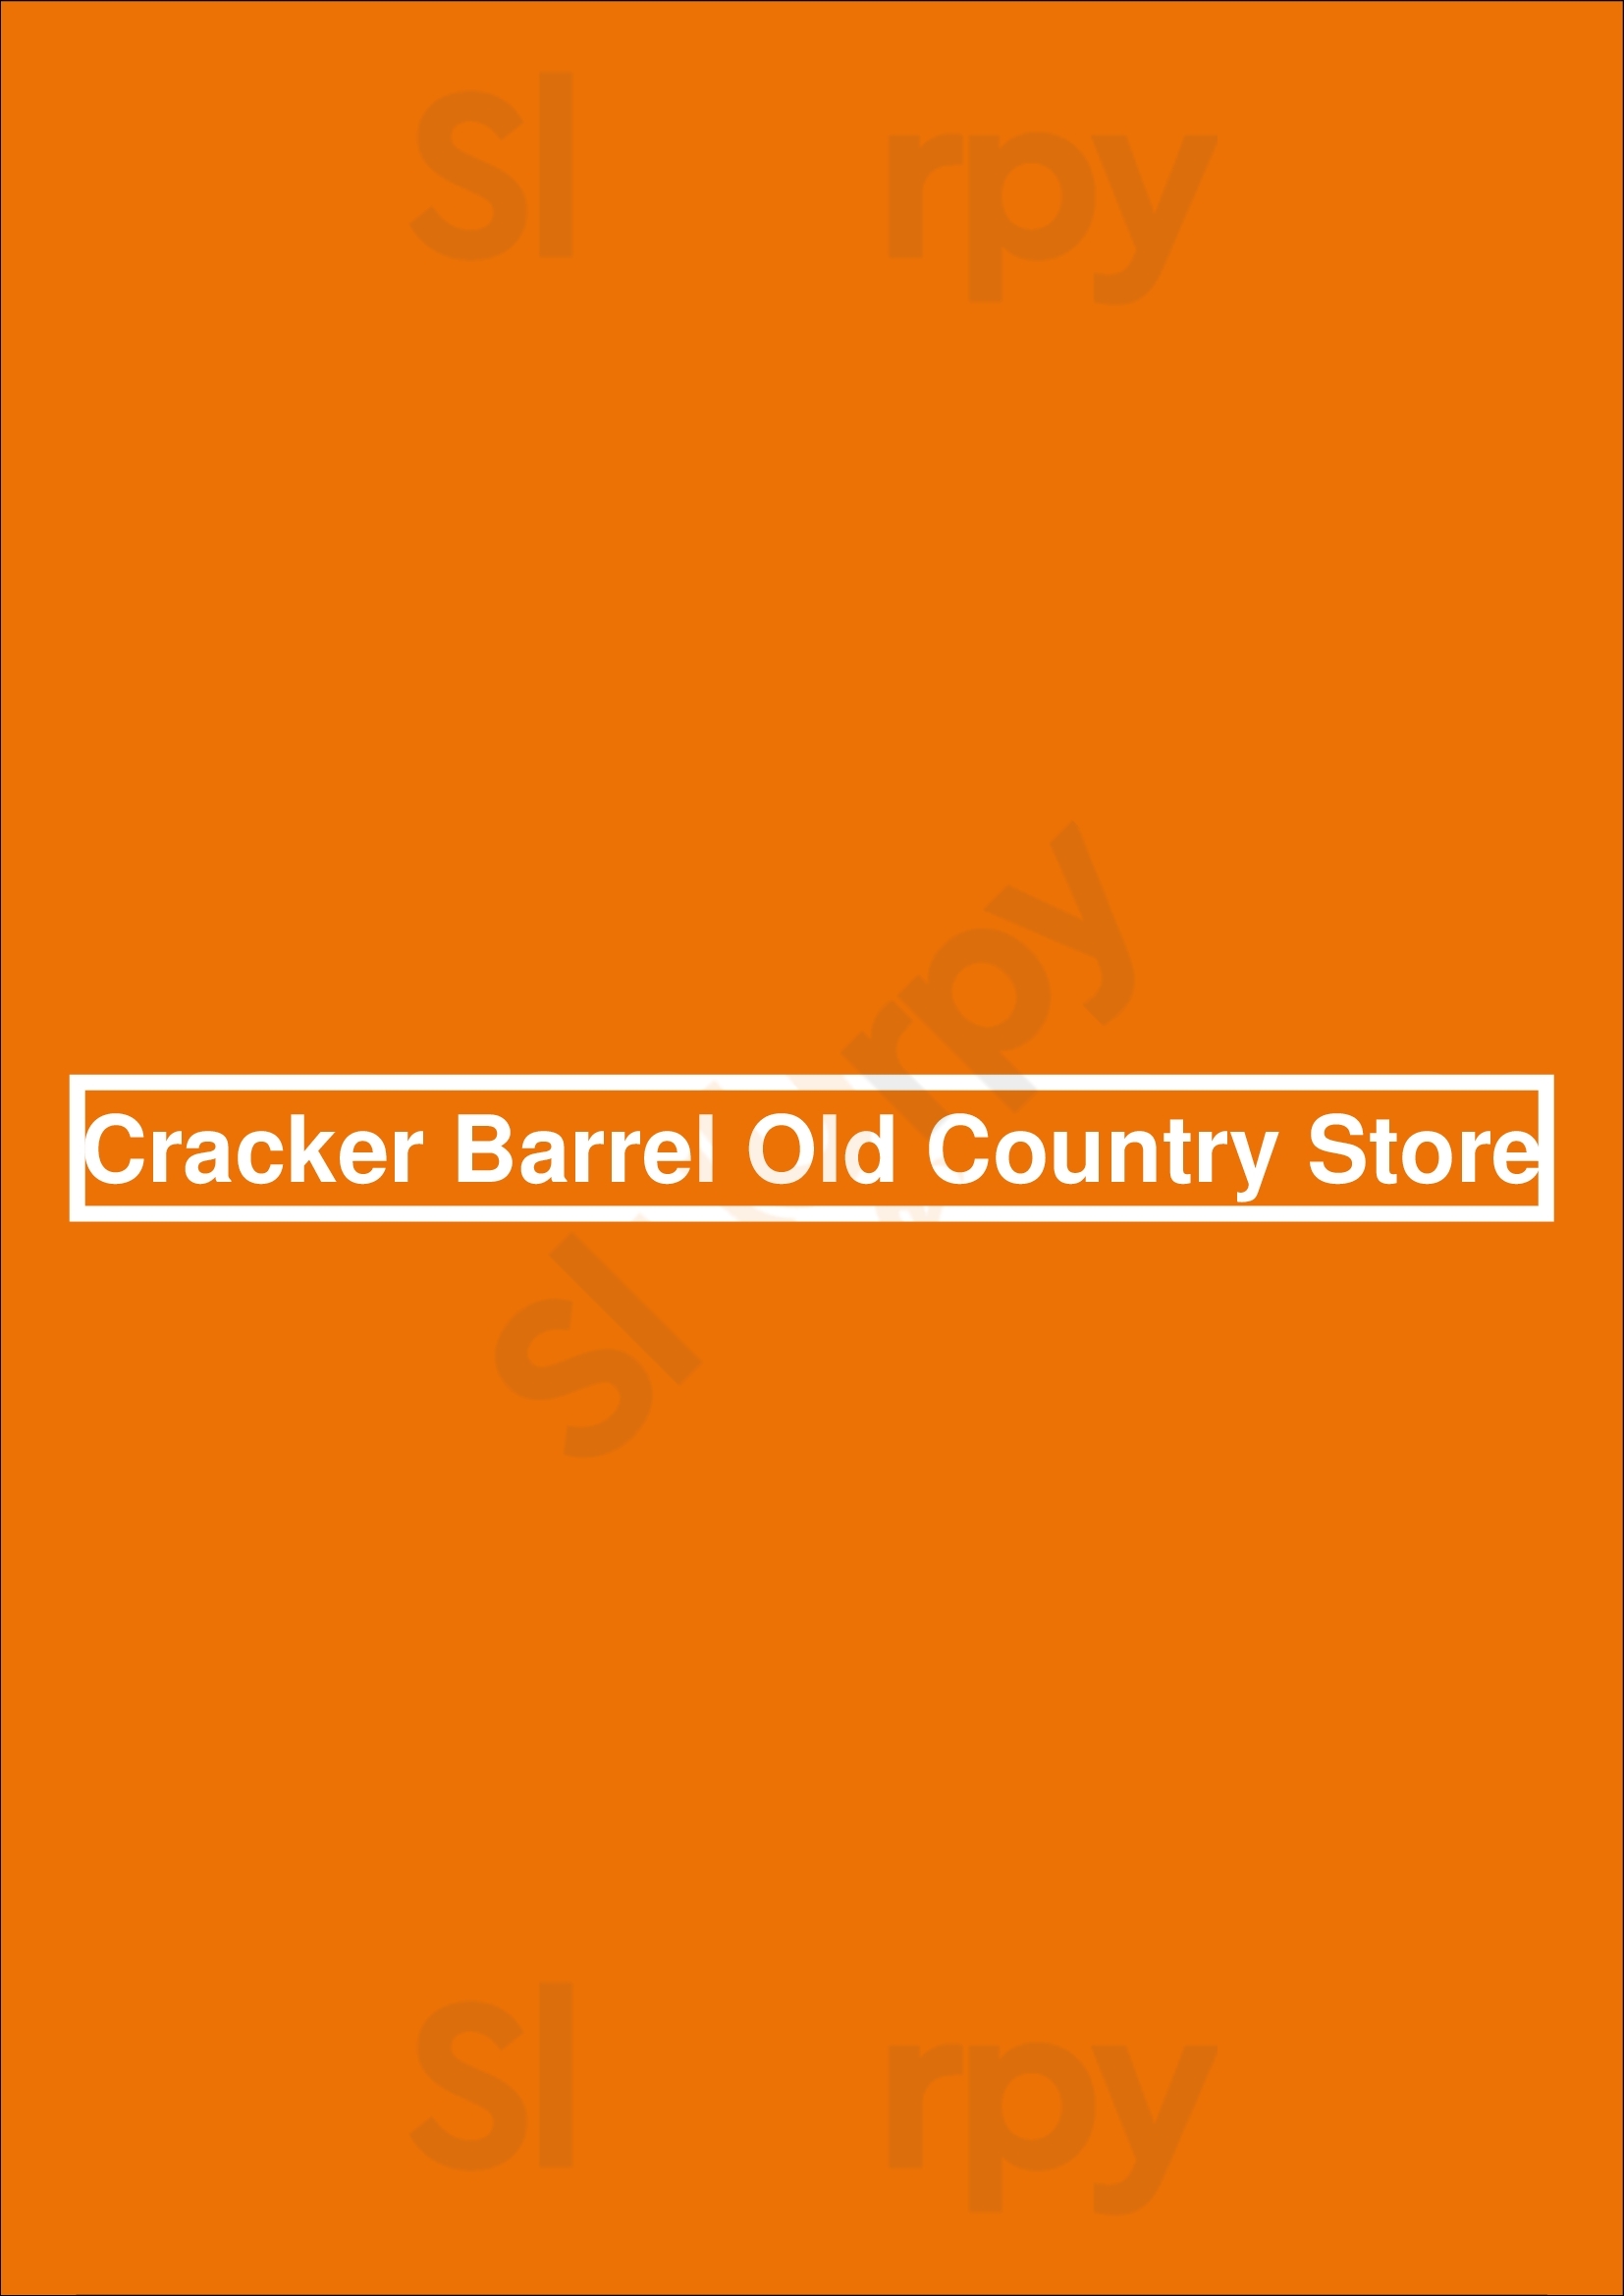 Cracker Barrel Old Country Store Las Vegas Menu - 1